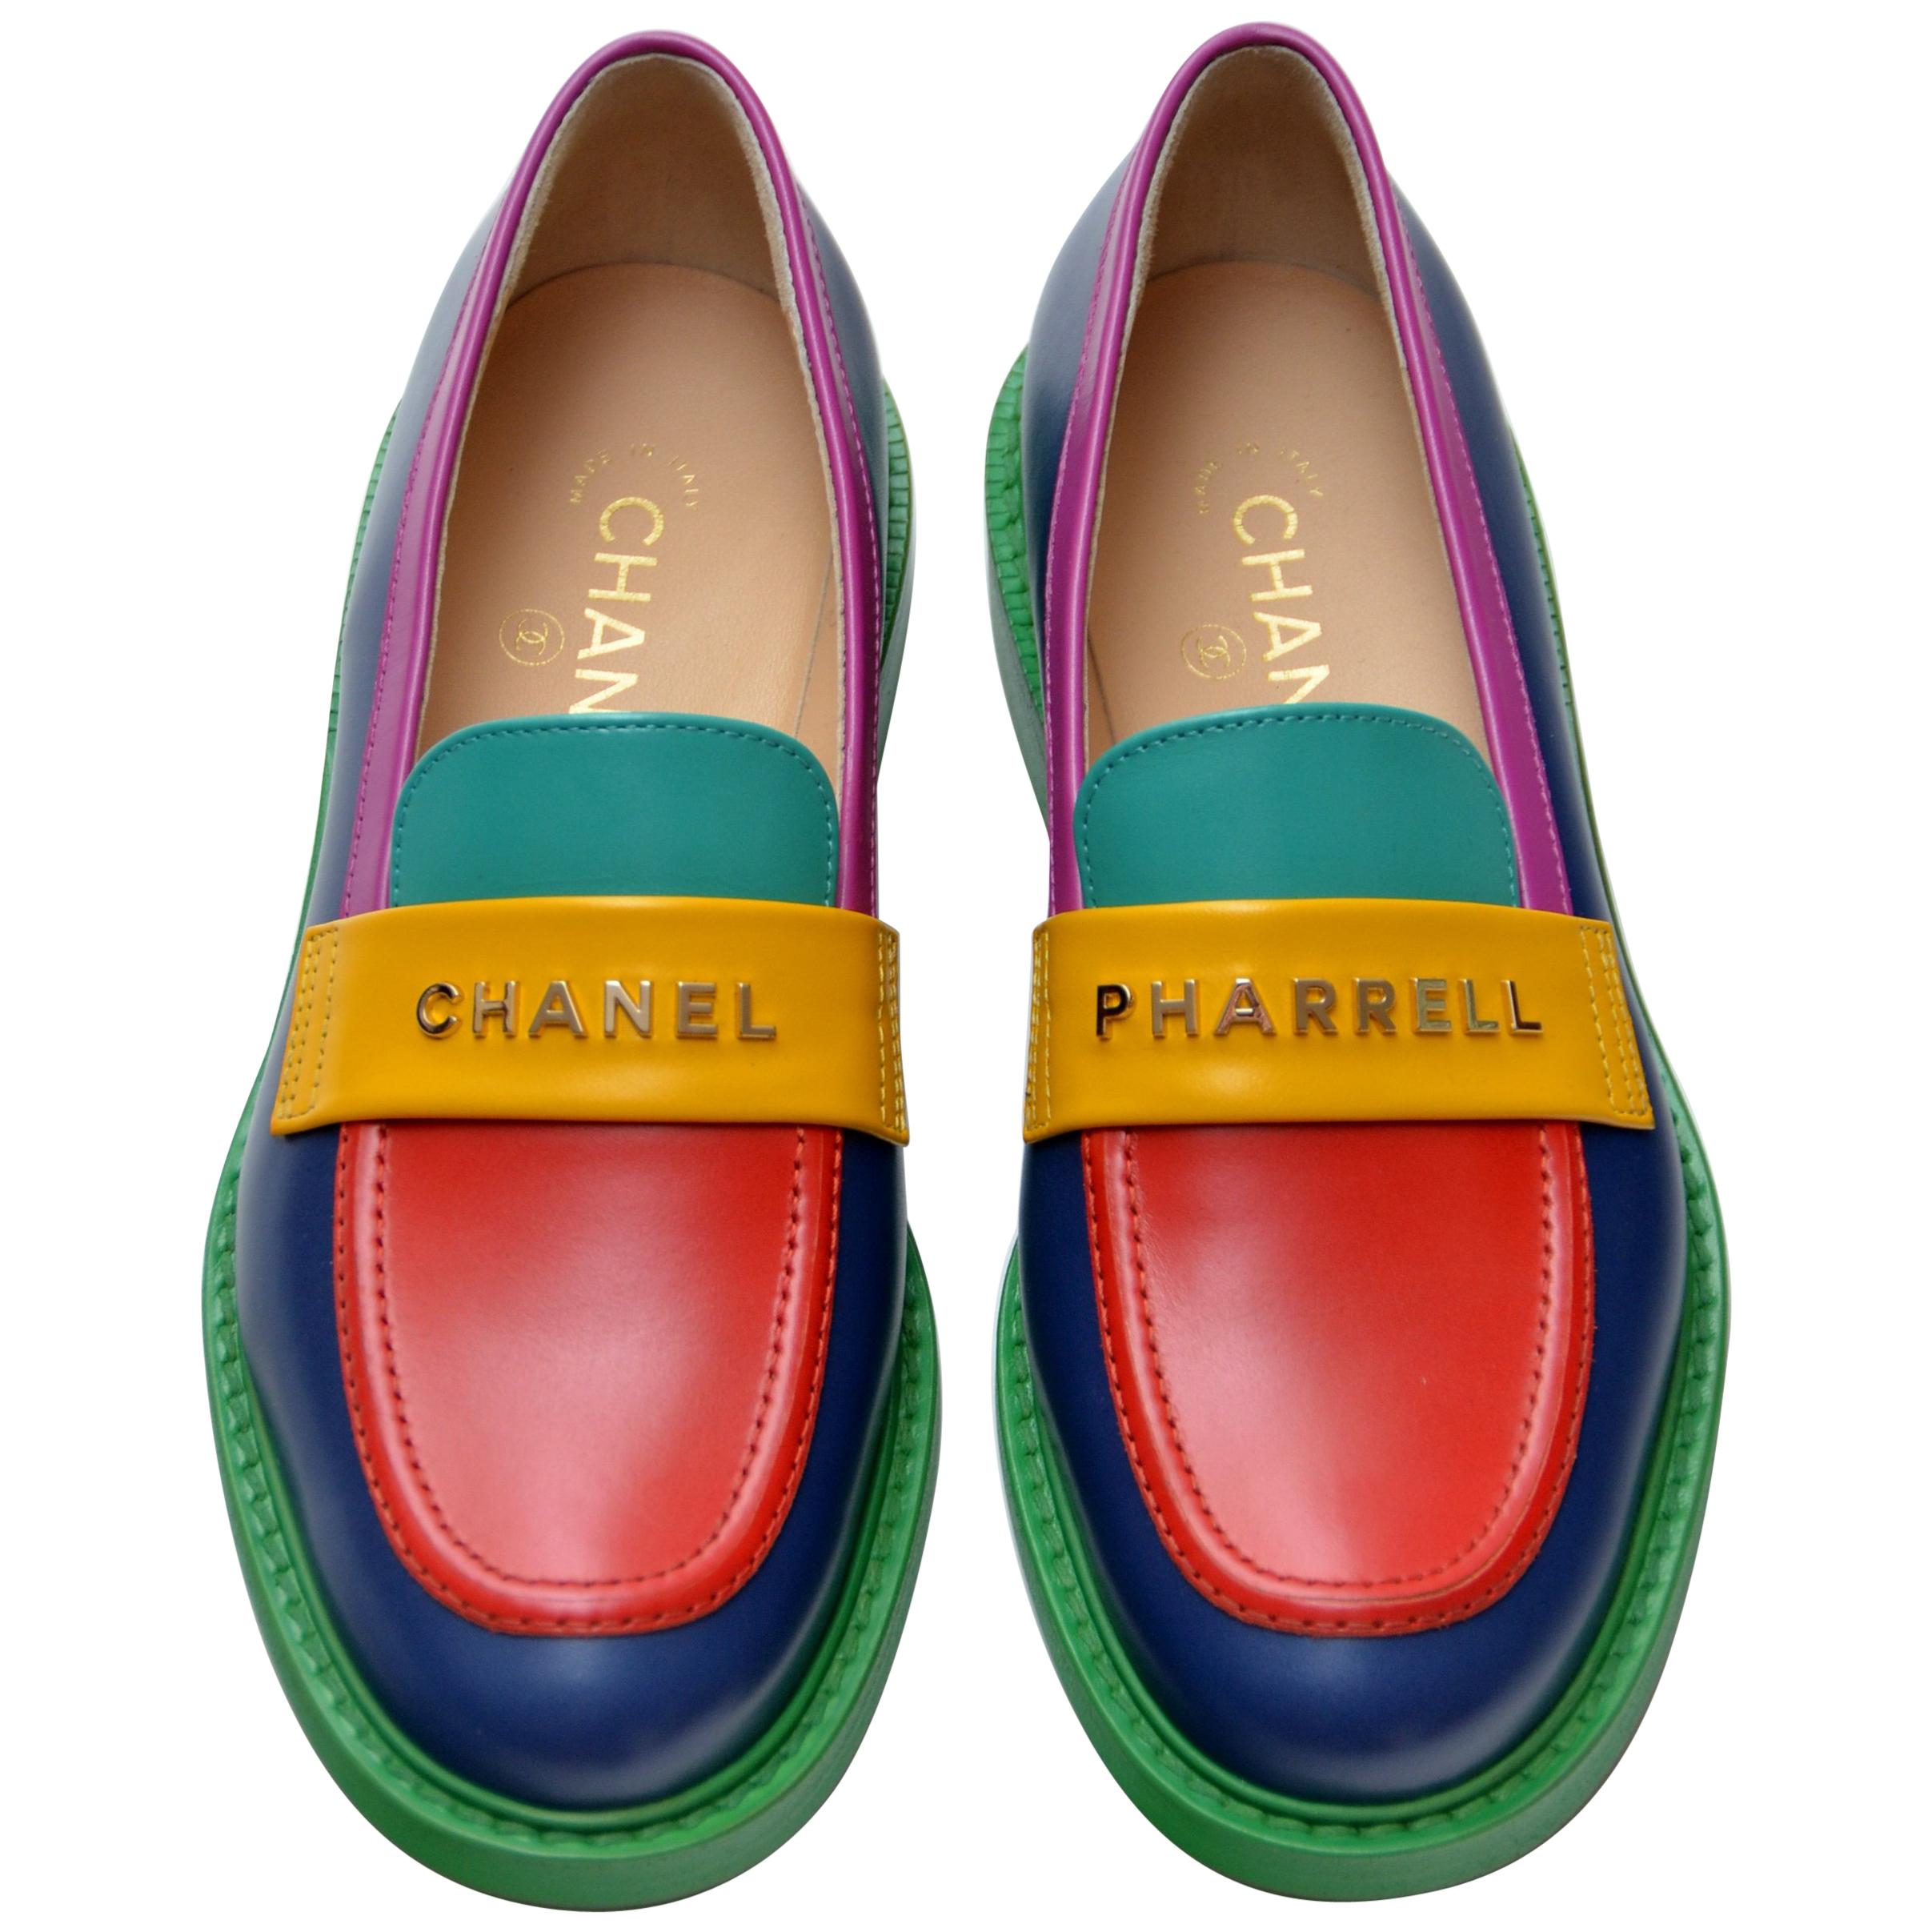 Chanel Pharrell Shoes  Grailed